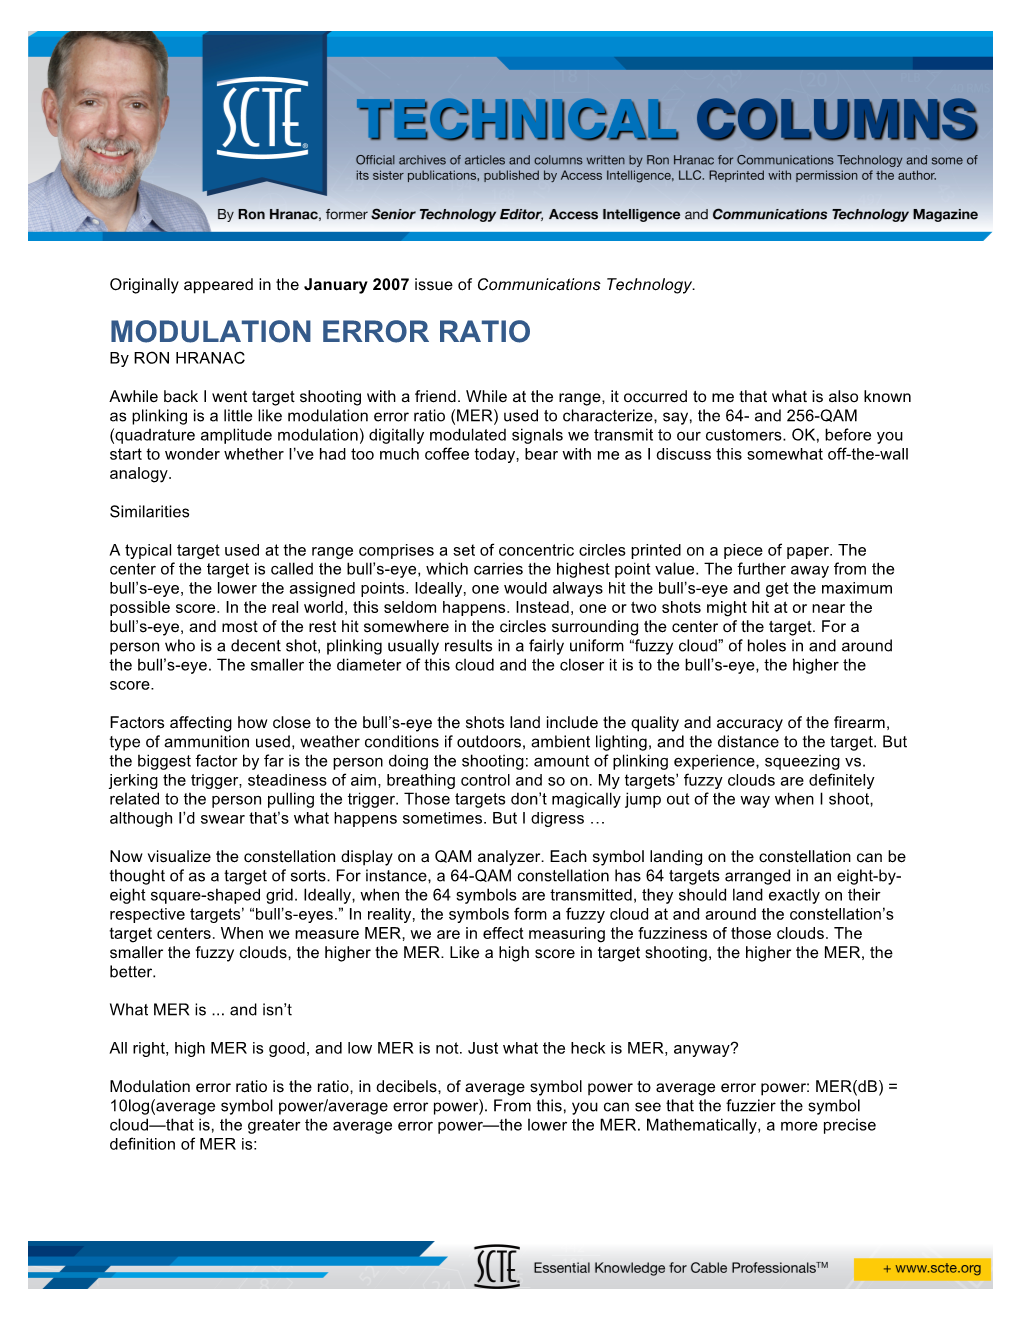 MODULATION ERROR RATIO by RON HRANAC